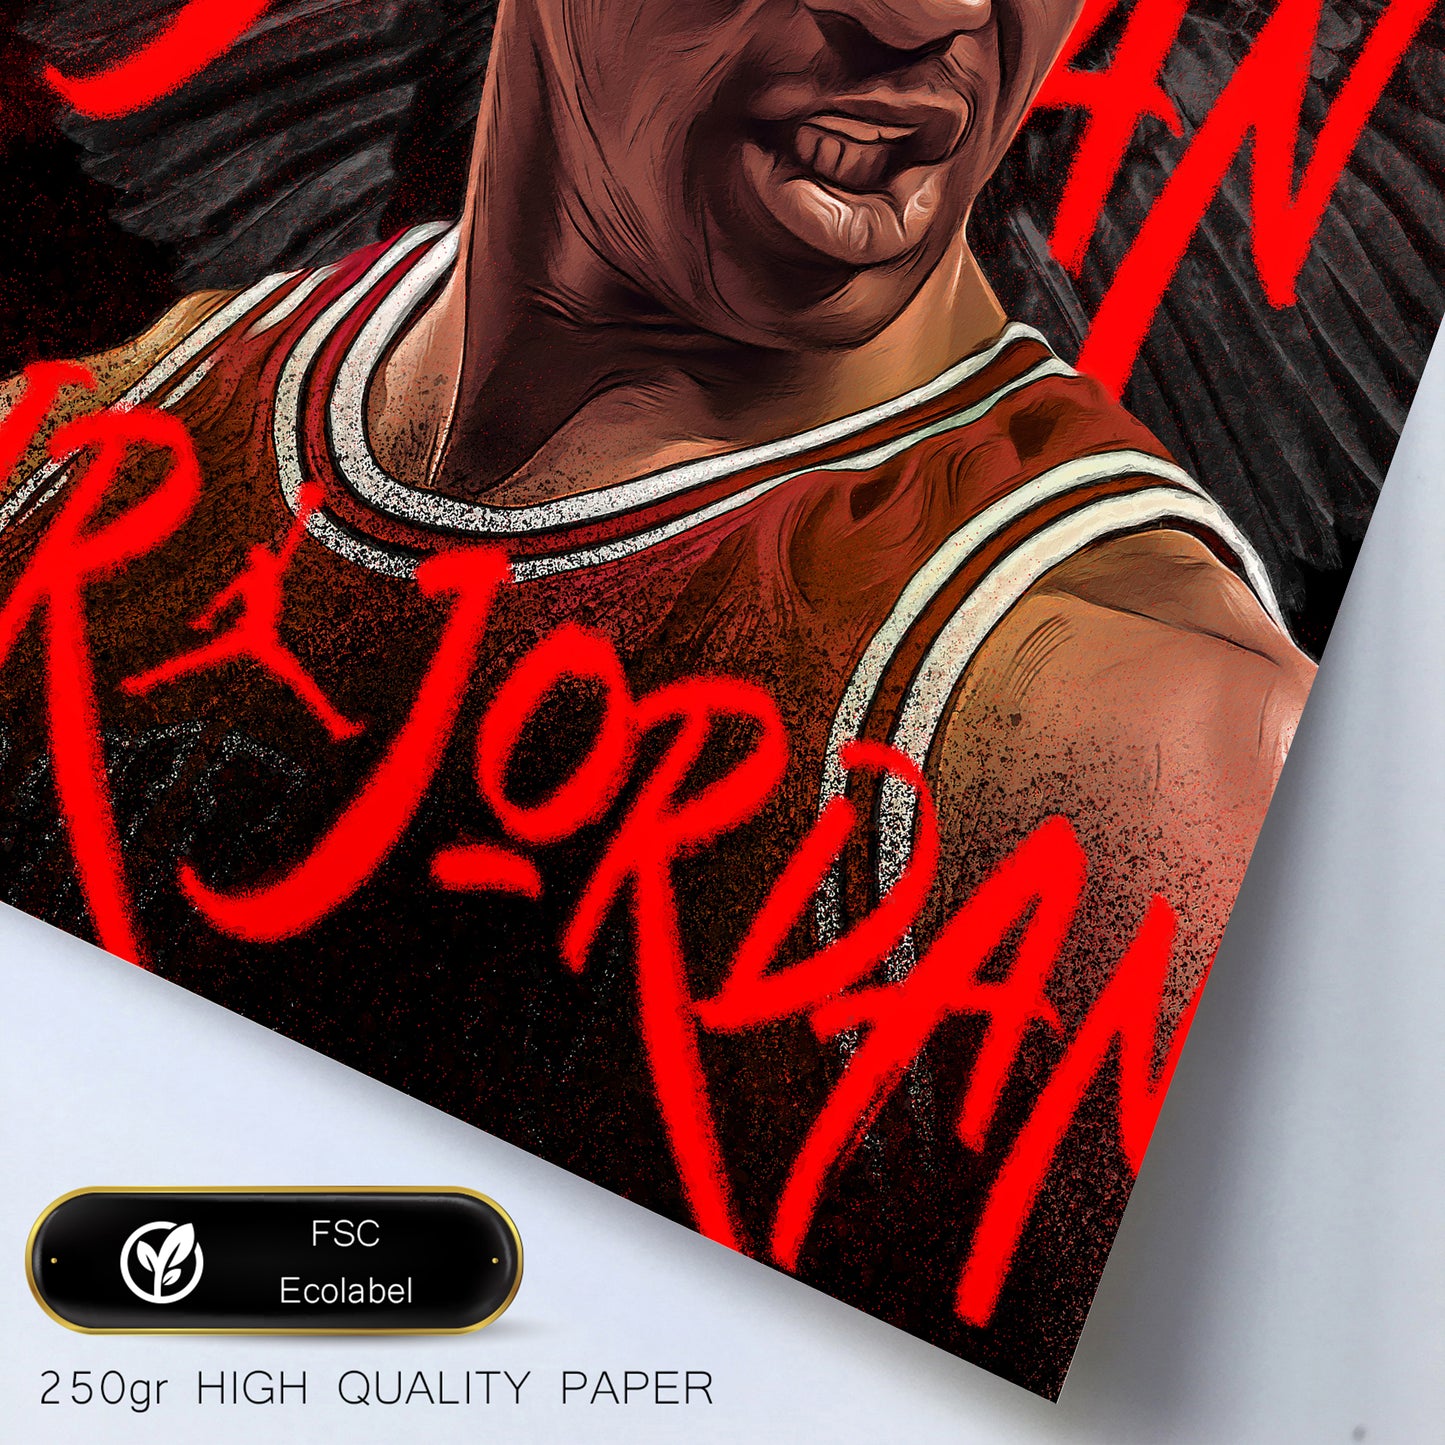 Iconic Jordan Grafiiti Red and Black